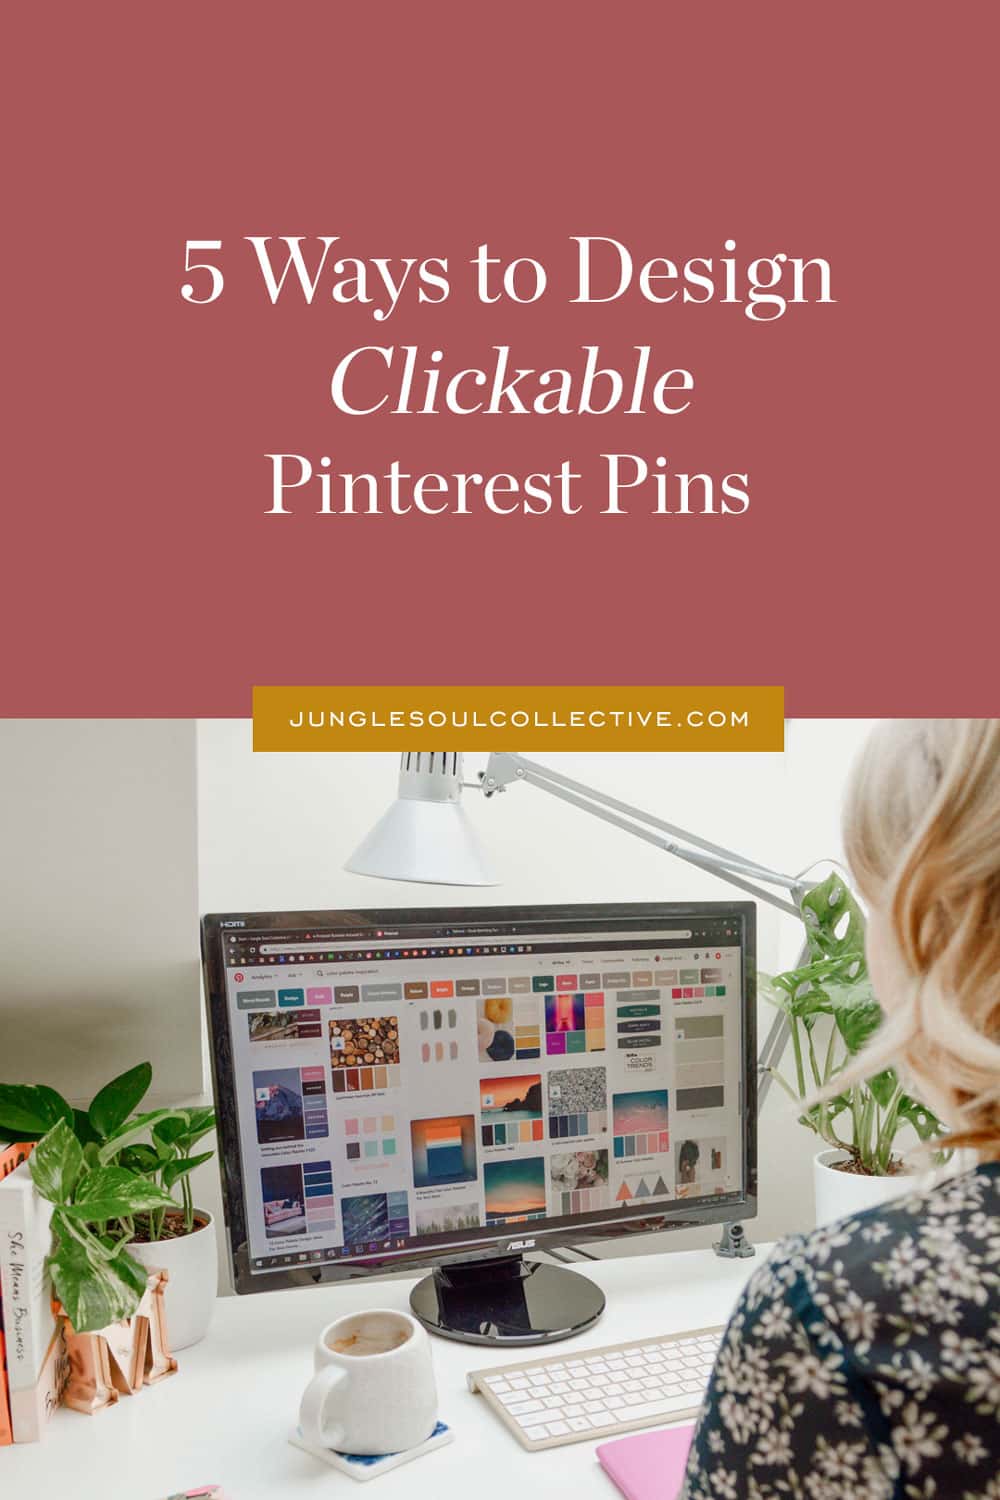 Create Pinterest Images that Convert